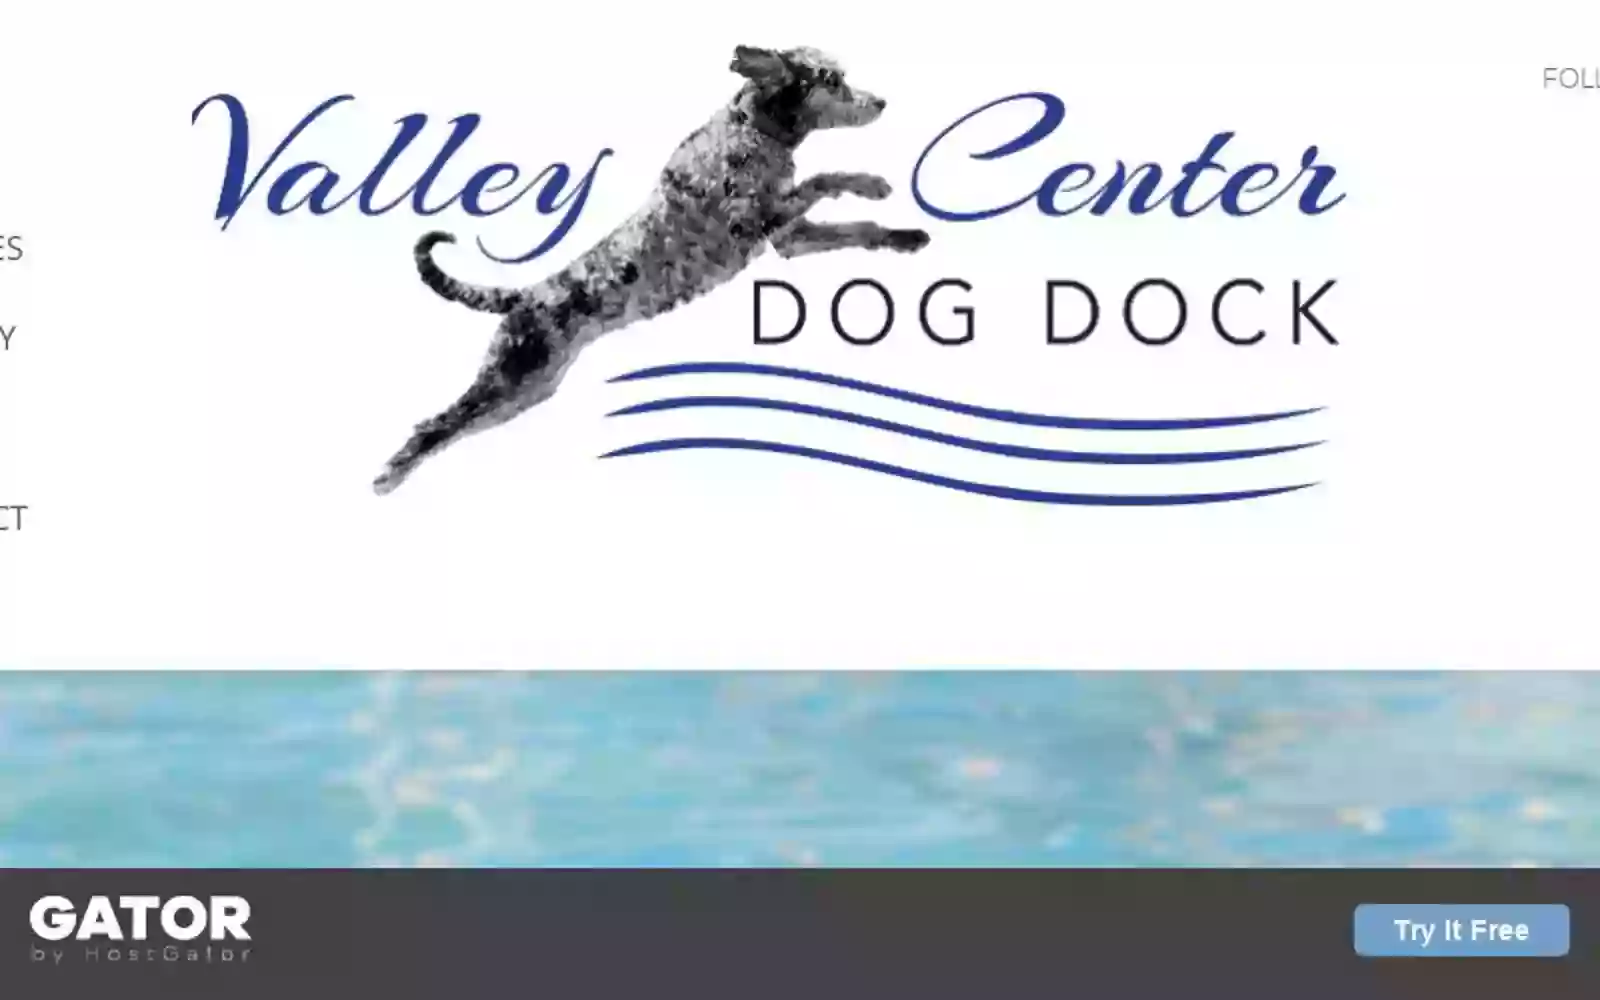 Valley Center Dog Dock